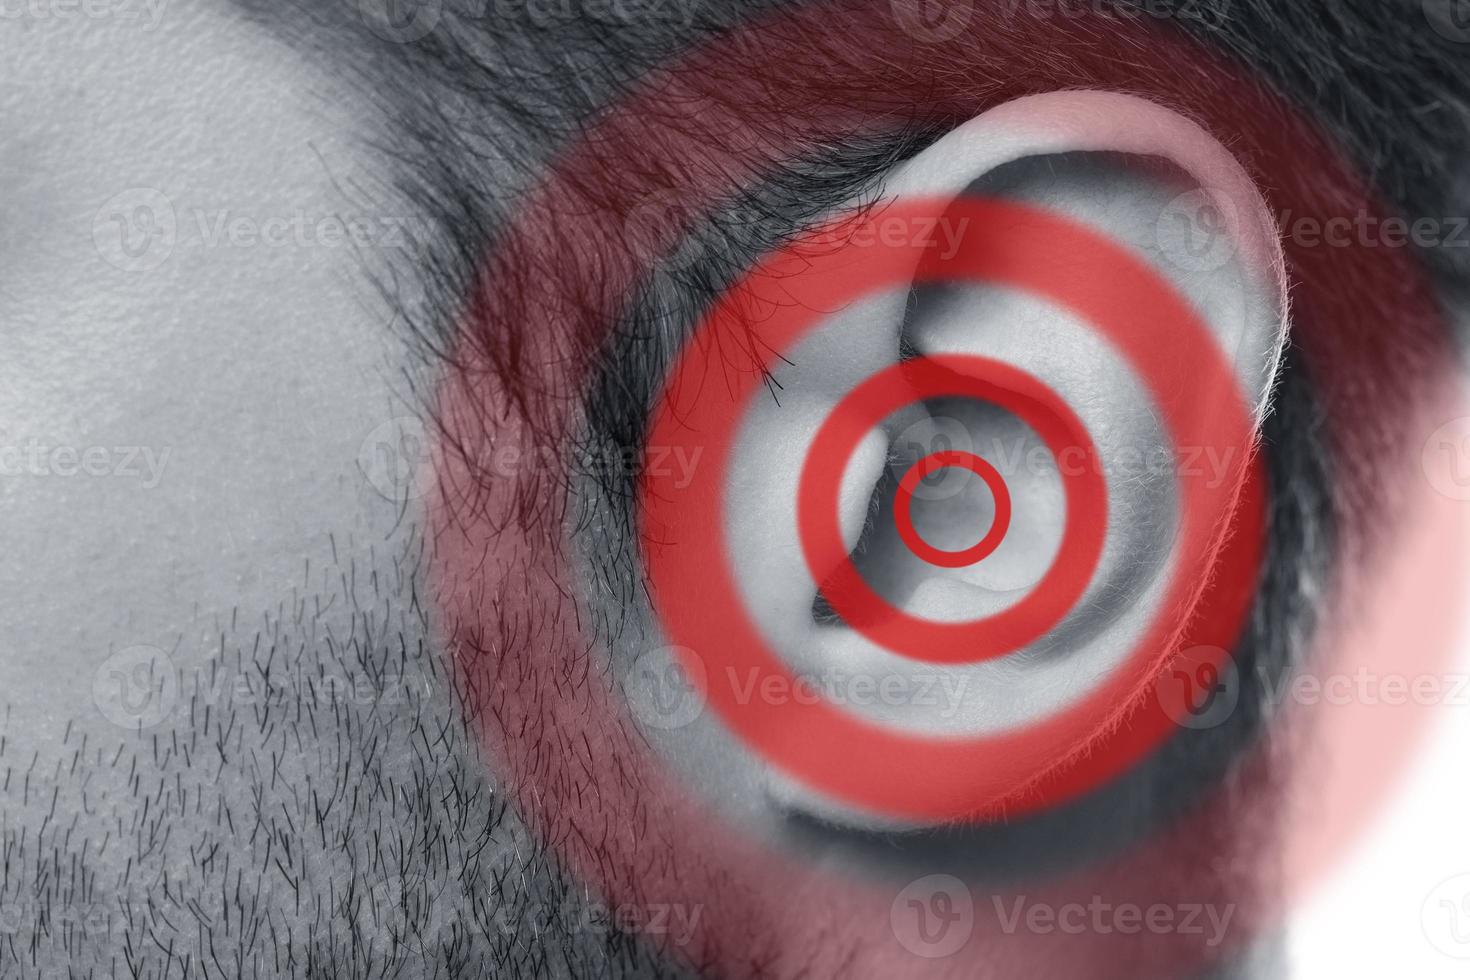 closeup de orelha masculina ferida com fonte de dor foto